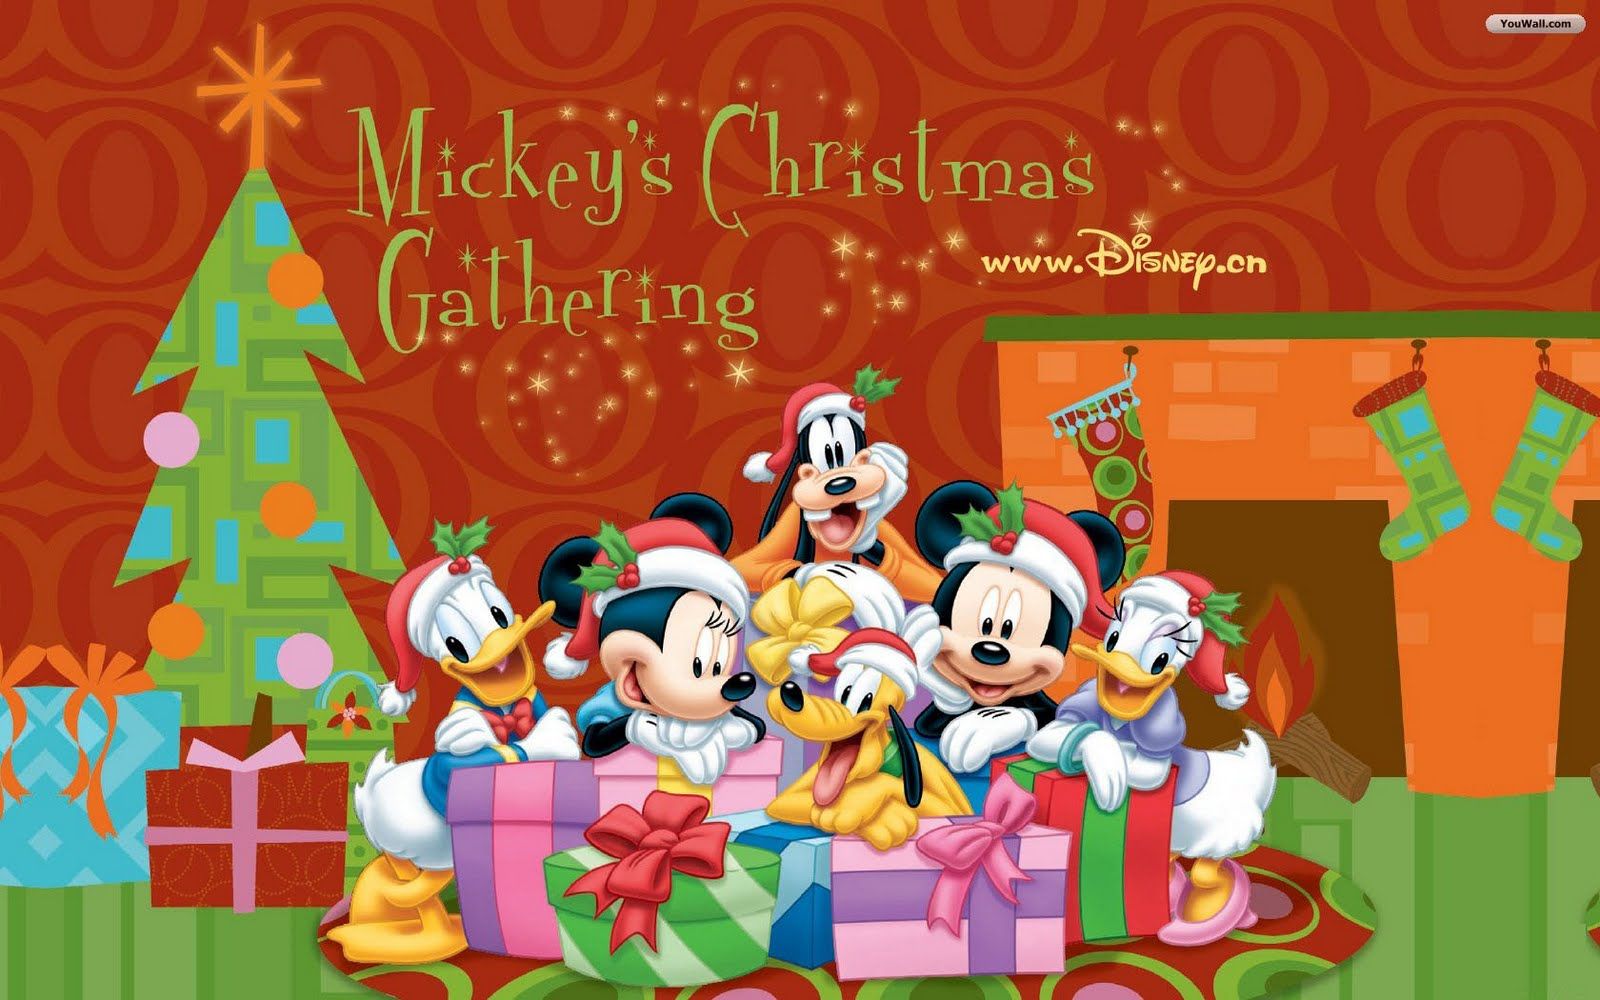 Chirstmas Wallpaper: Kid at Christmas: 5 adorable Disney Christmas wallpaper for your